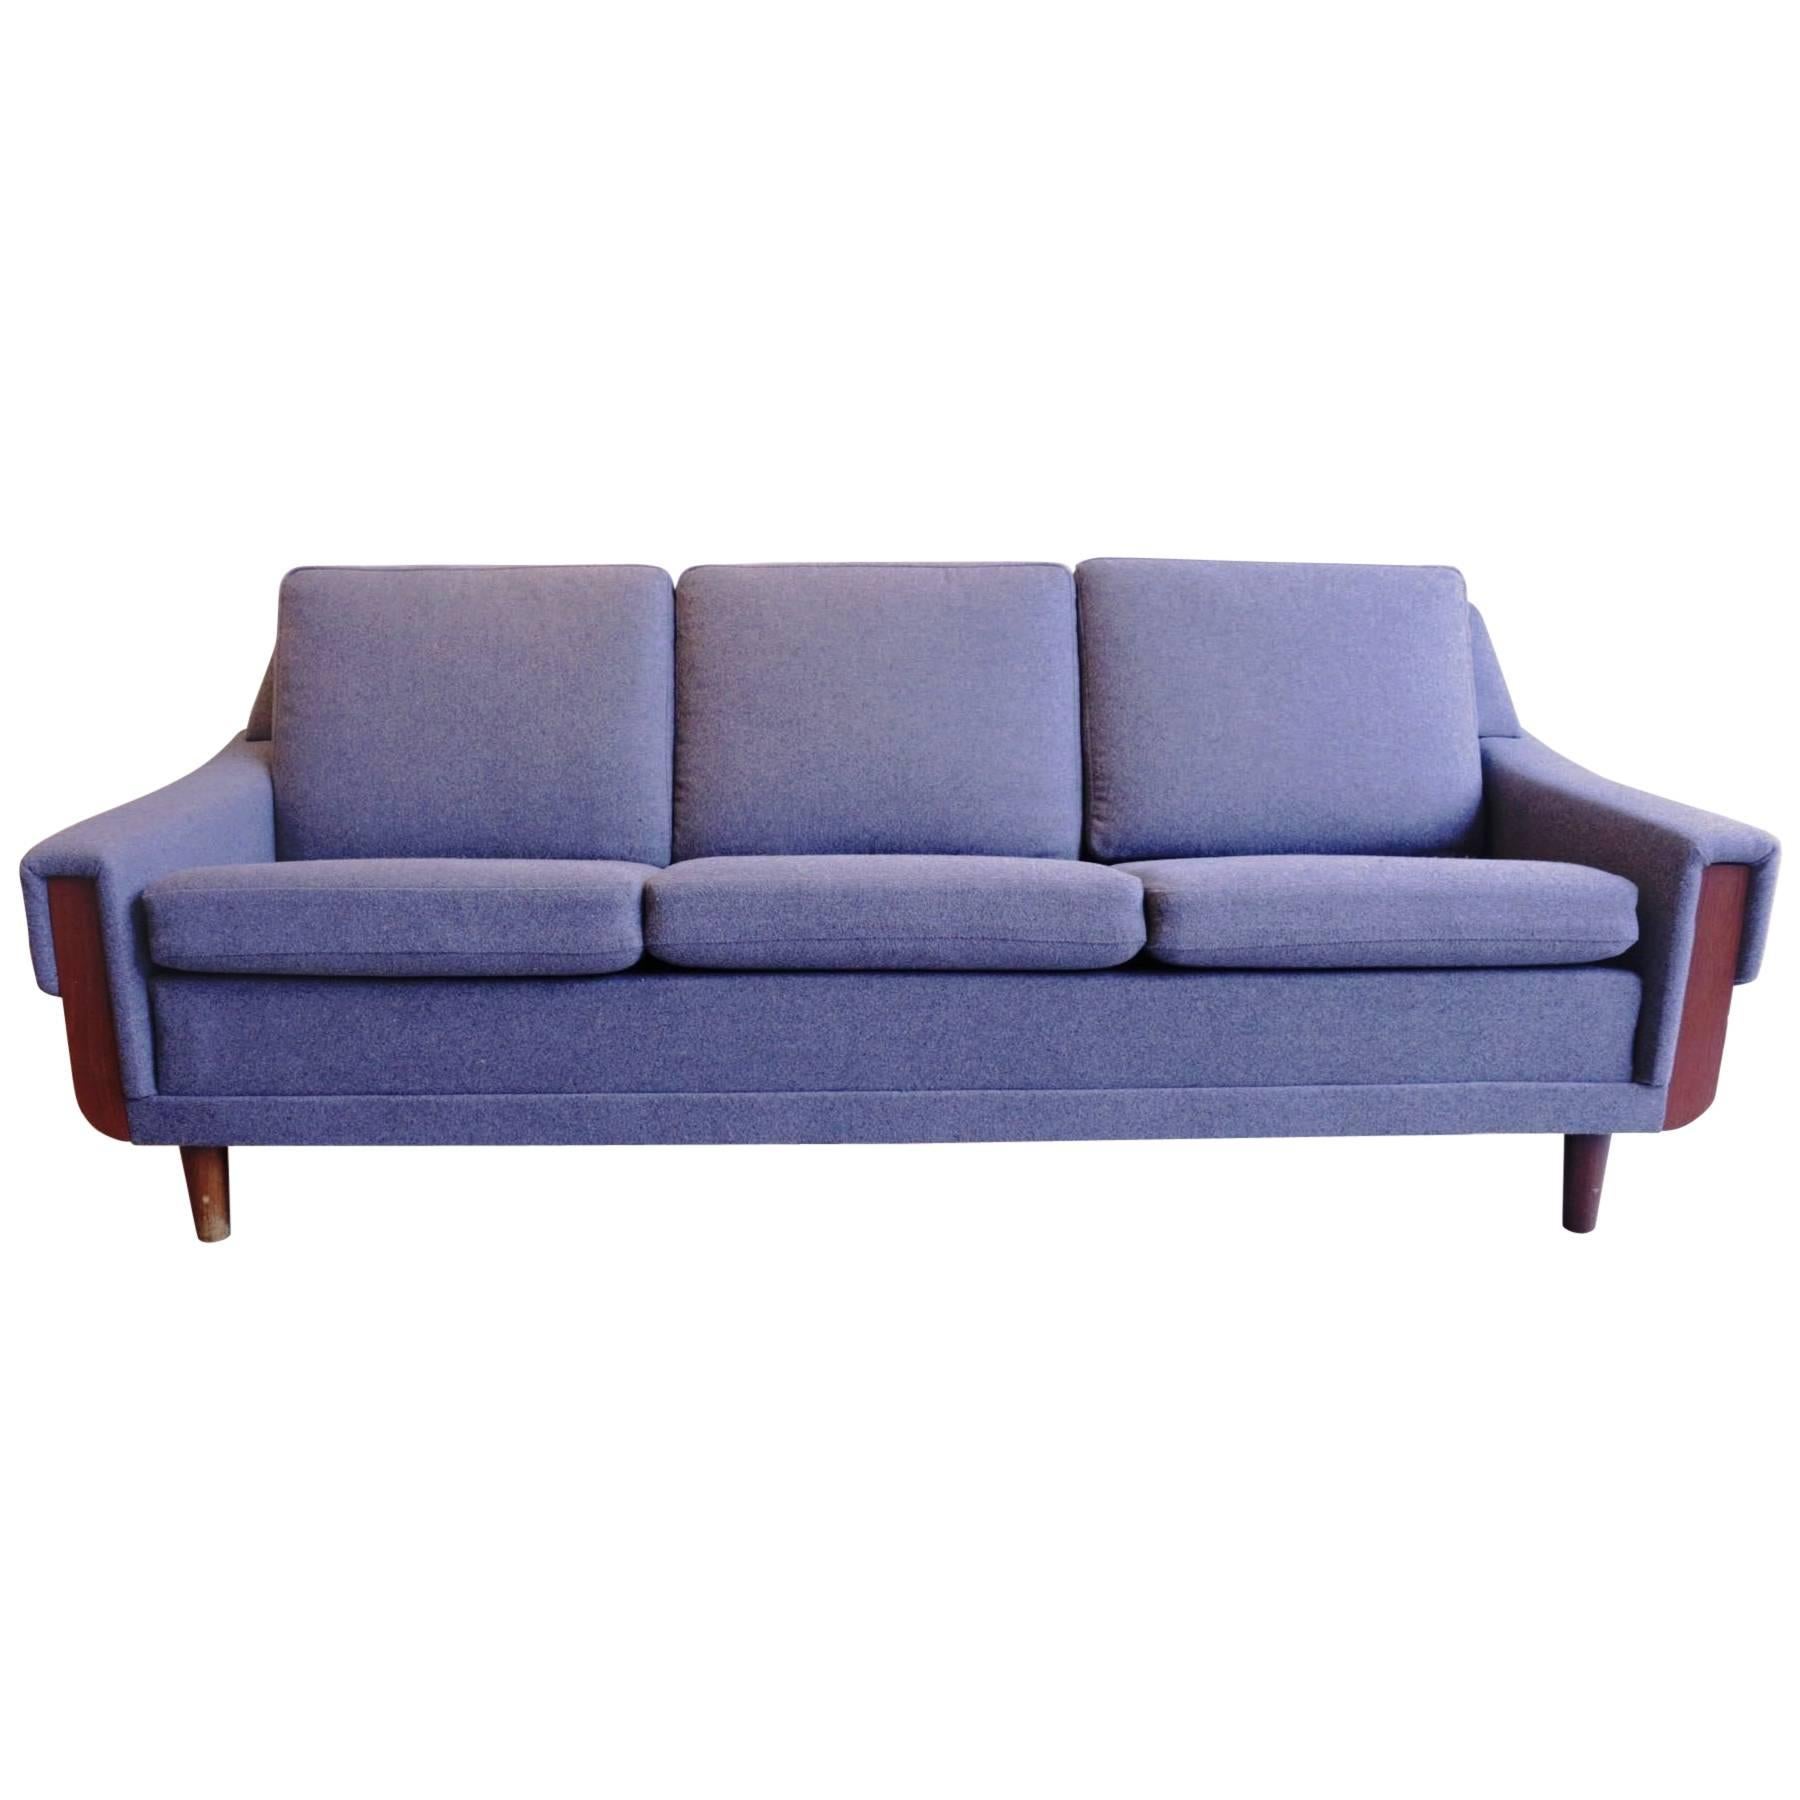 Scandinavian Three-Seat Sofa, New Grey Flannel Upholstery, 1960s-1970s